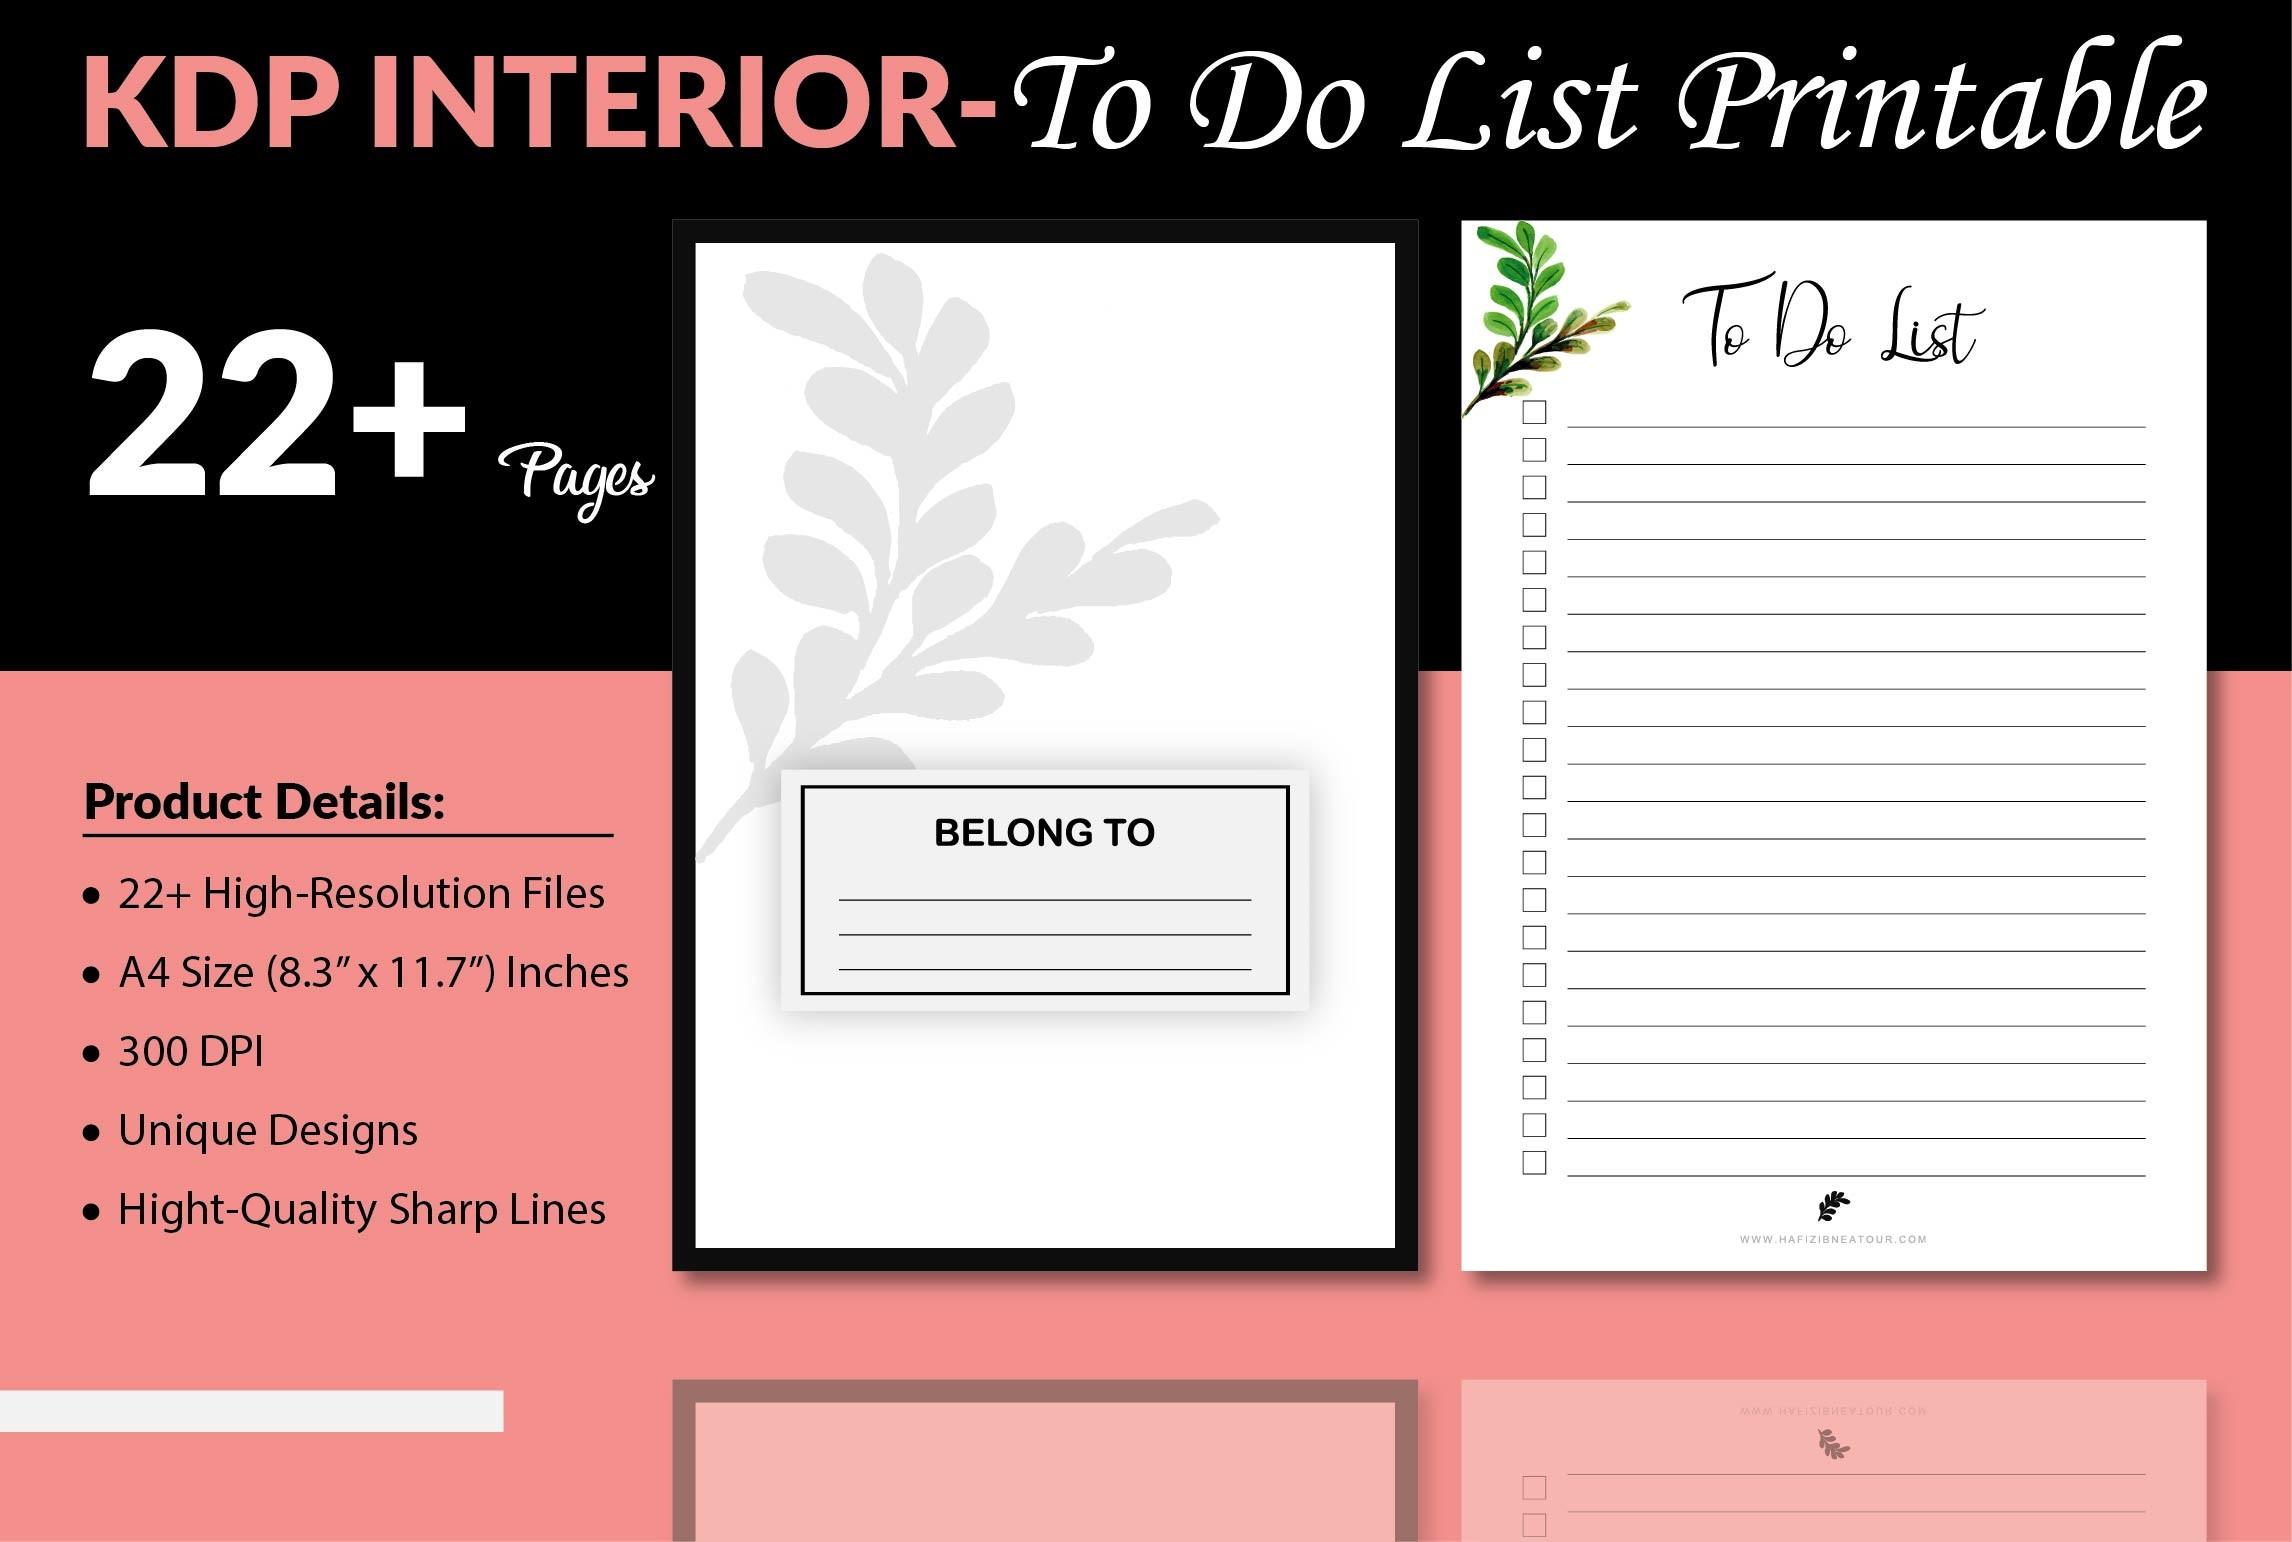 To Do List Printable - KDP Interior